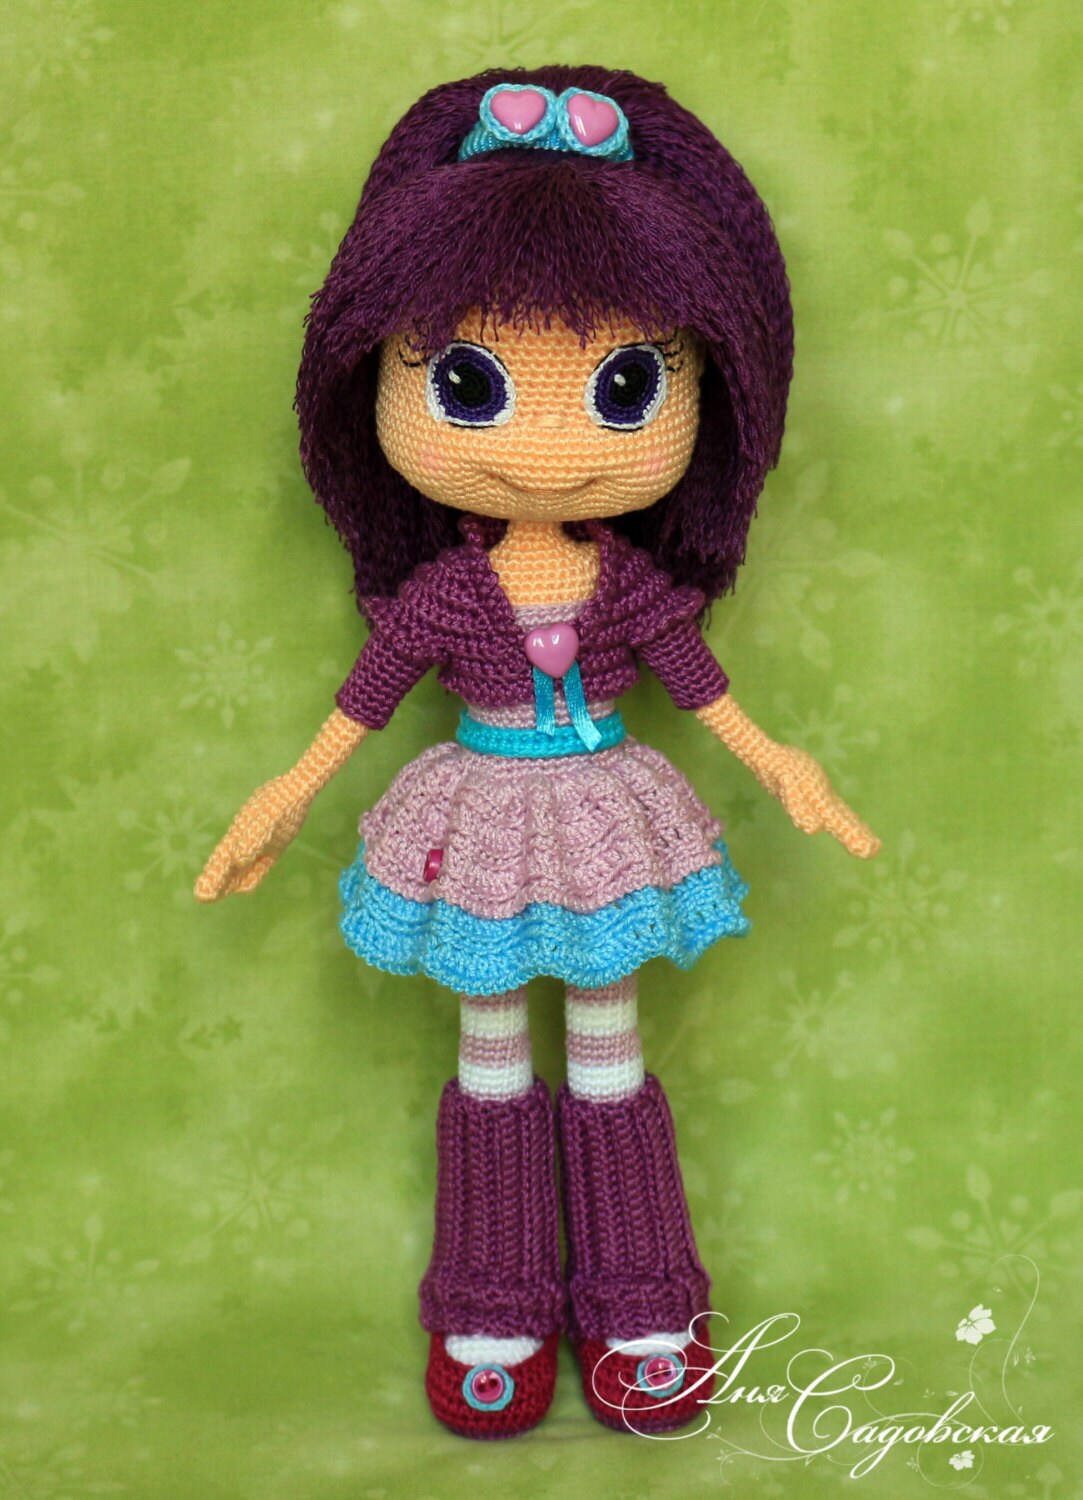 Plum Pudding Amigurumi Crochet Doll Pattern PDF File by Anna | Etsy